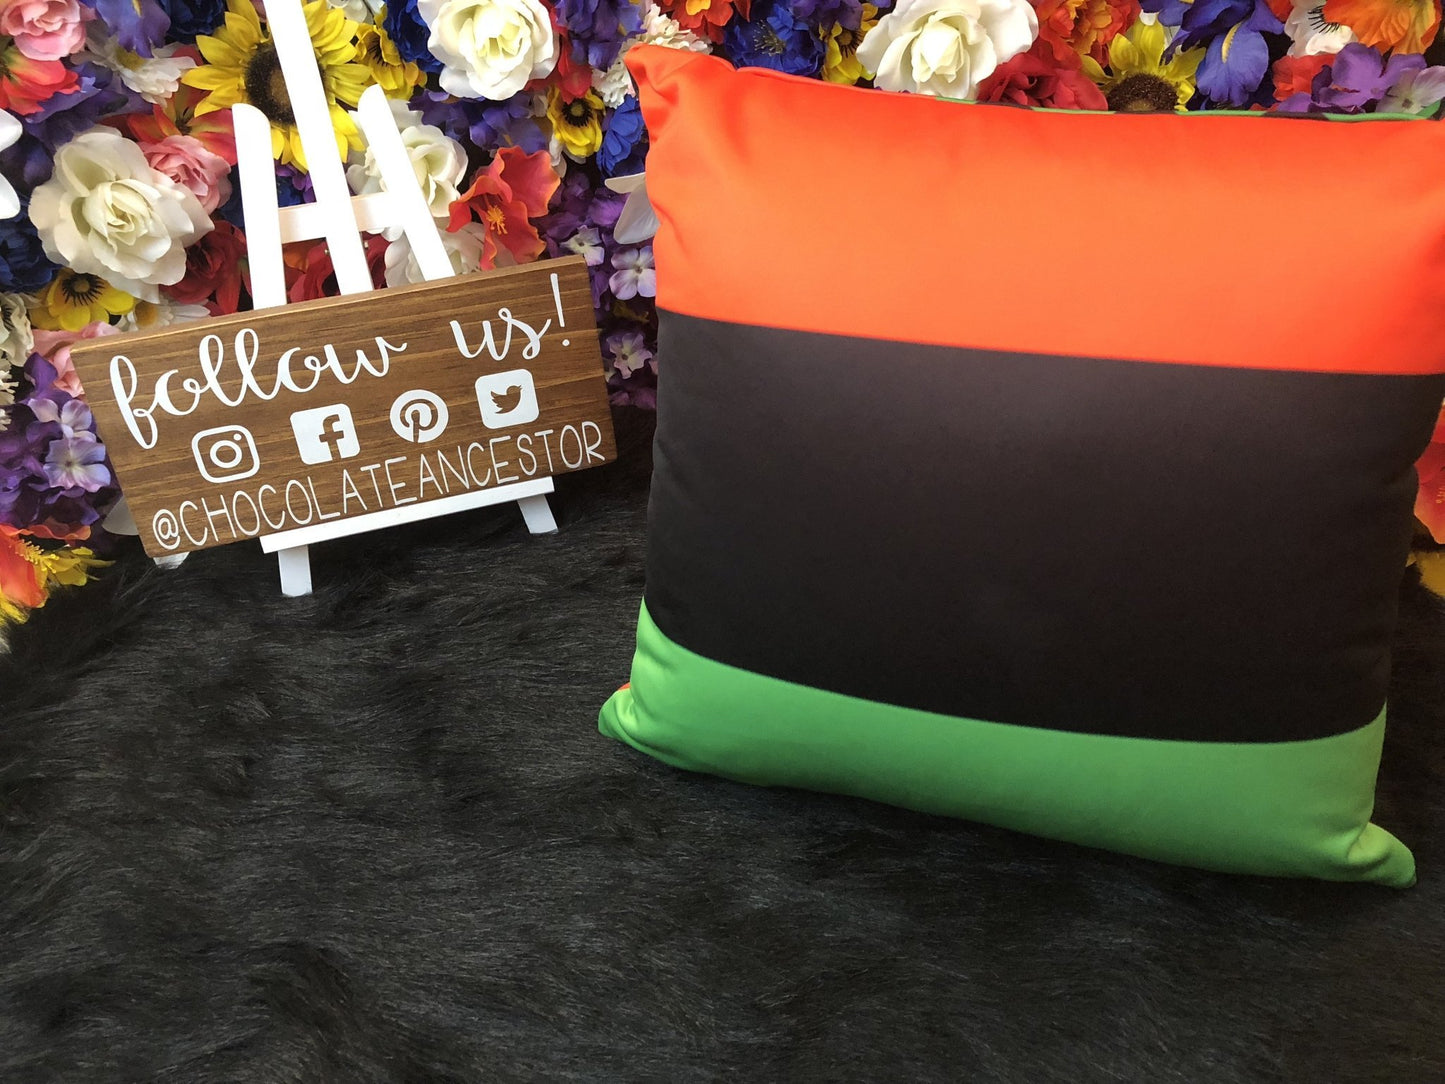 RBG Pan African Flags Reversible Pillow - Chocolate Ancestor